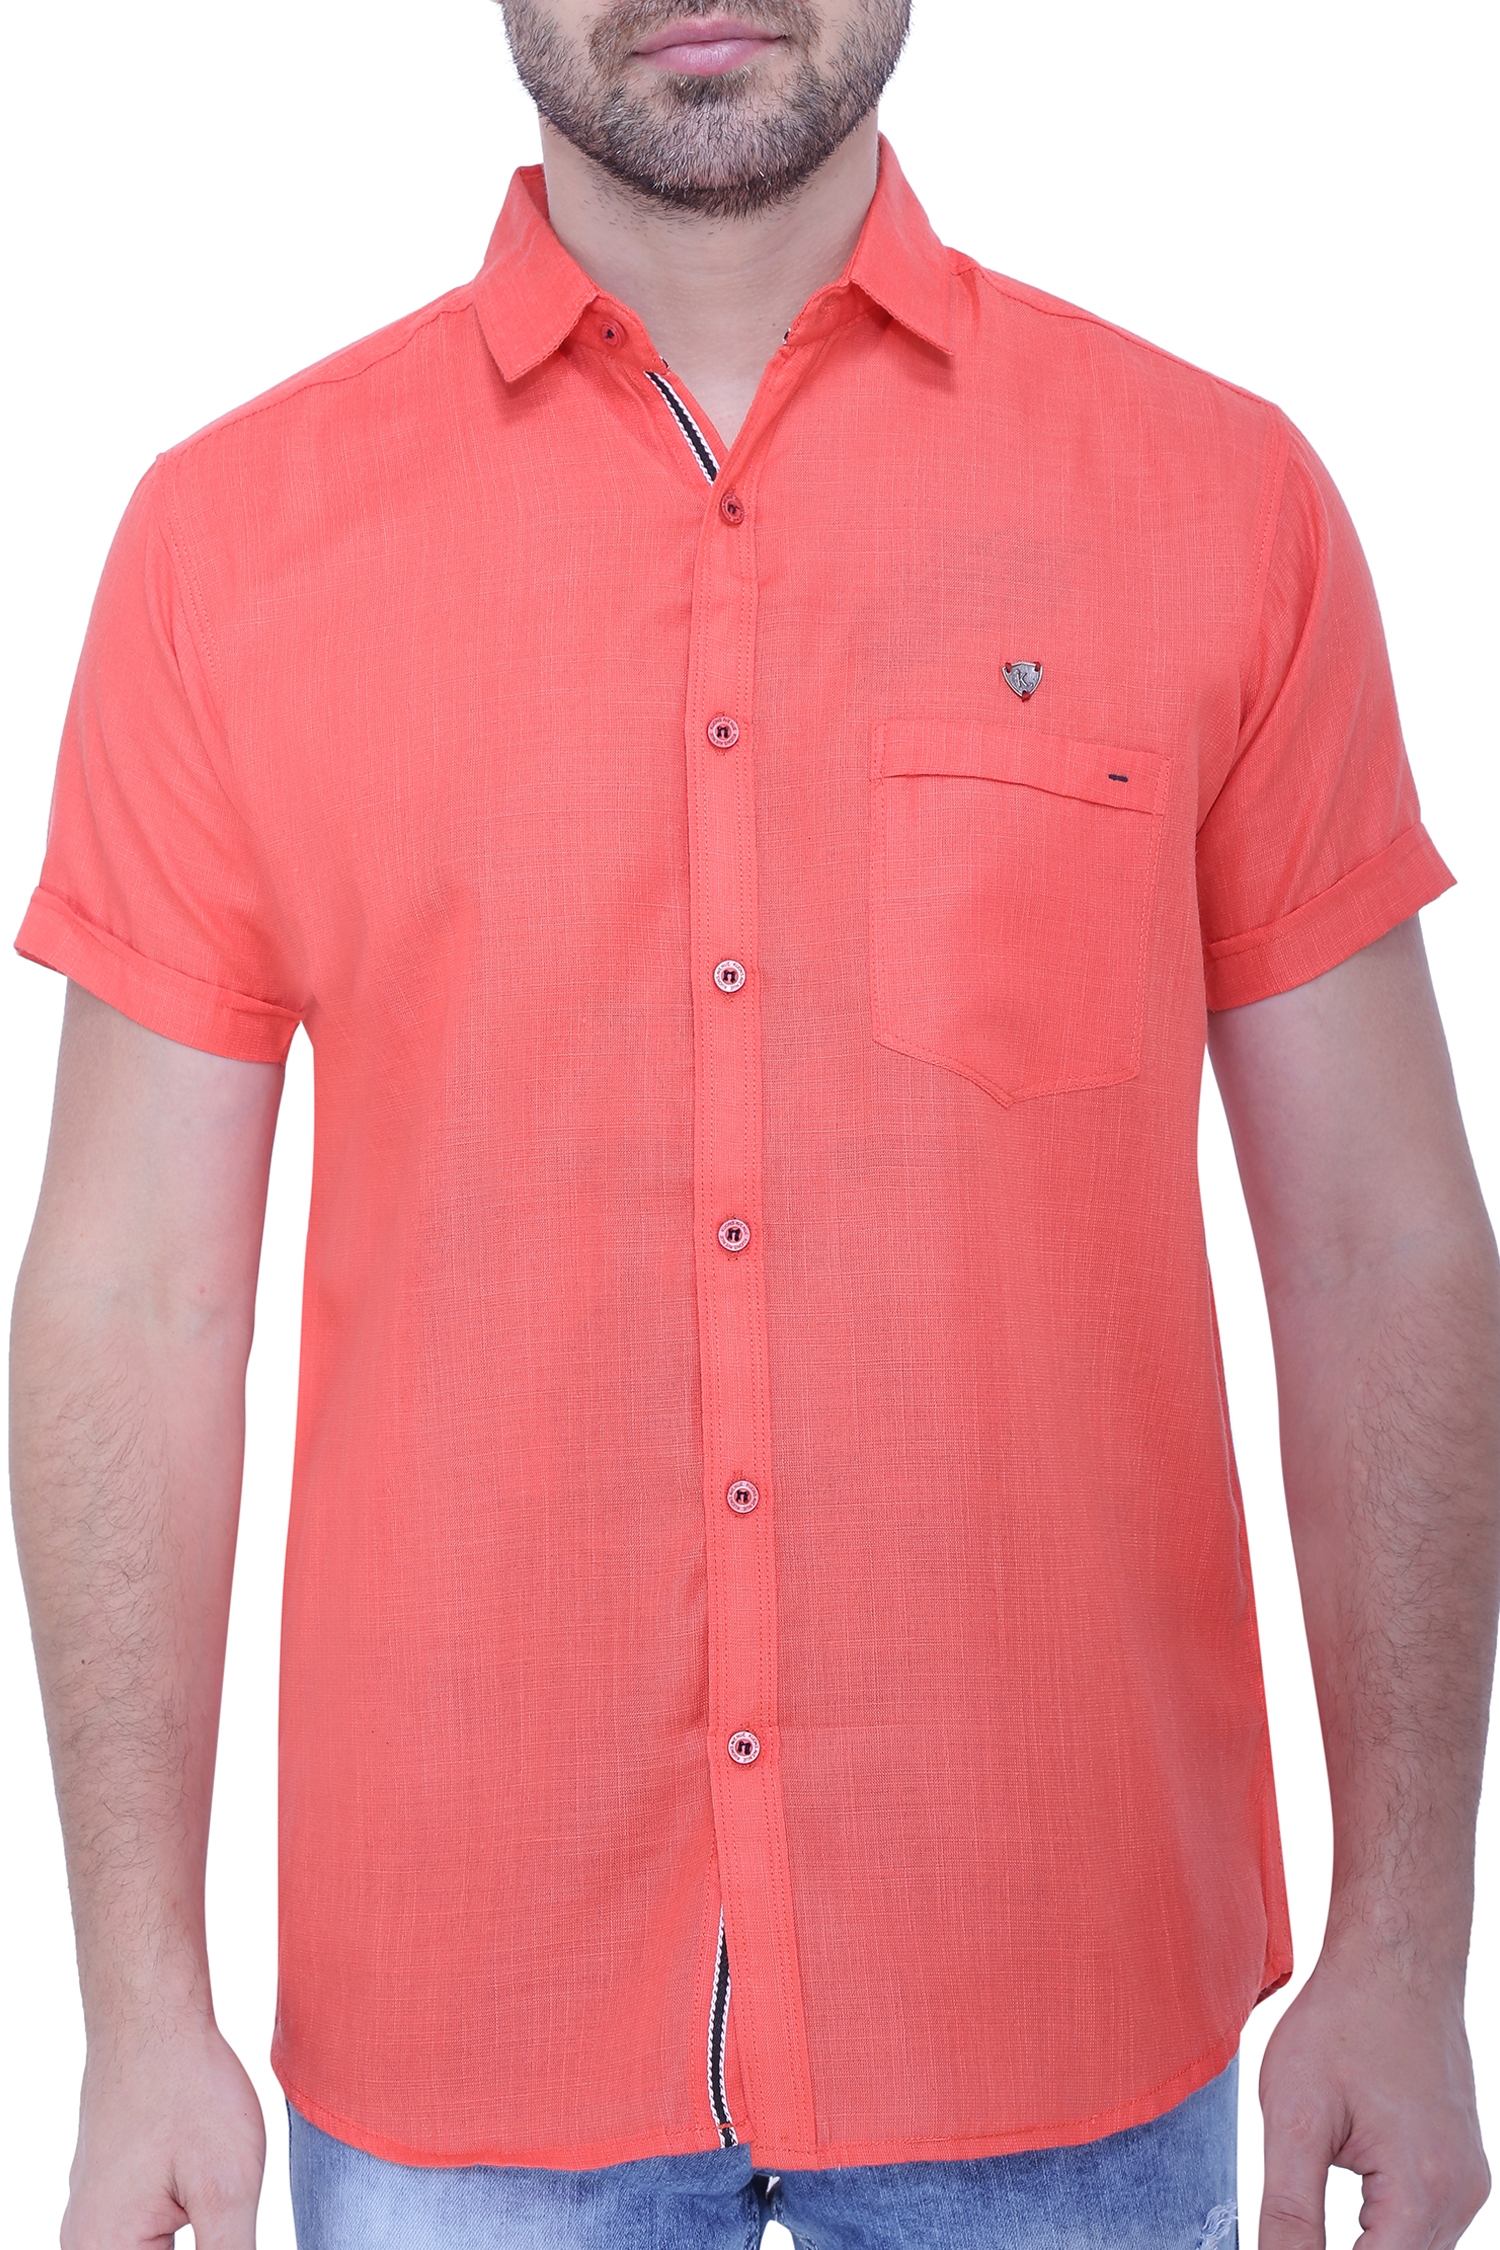 Kuons Avenue | Kuons Avenue Men's Linen Blend Half Sleeves Casual Shirt-KACLHS1233 3